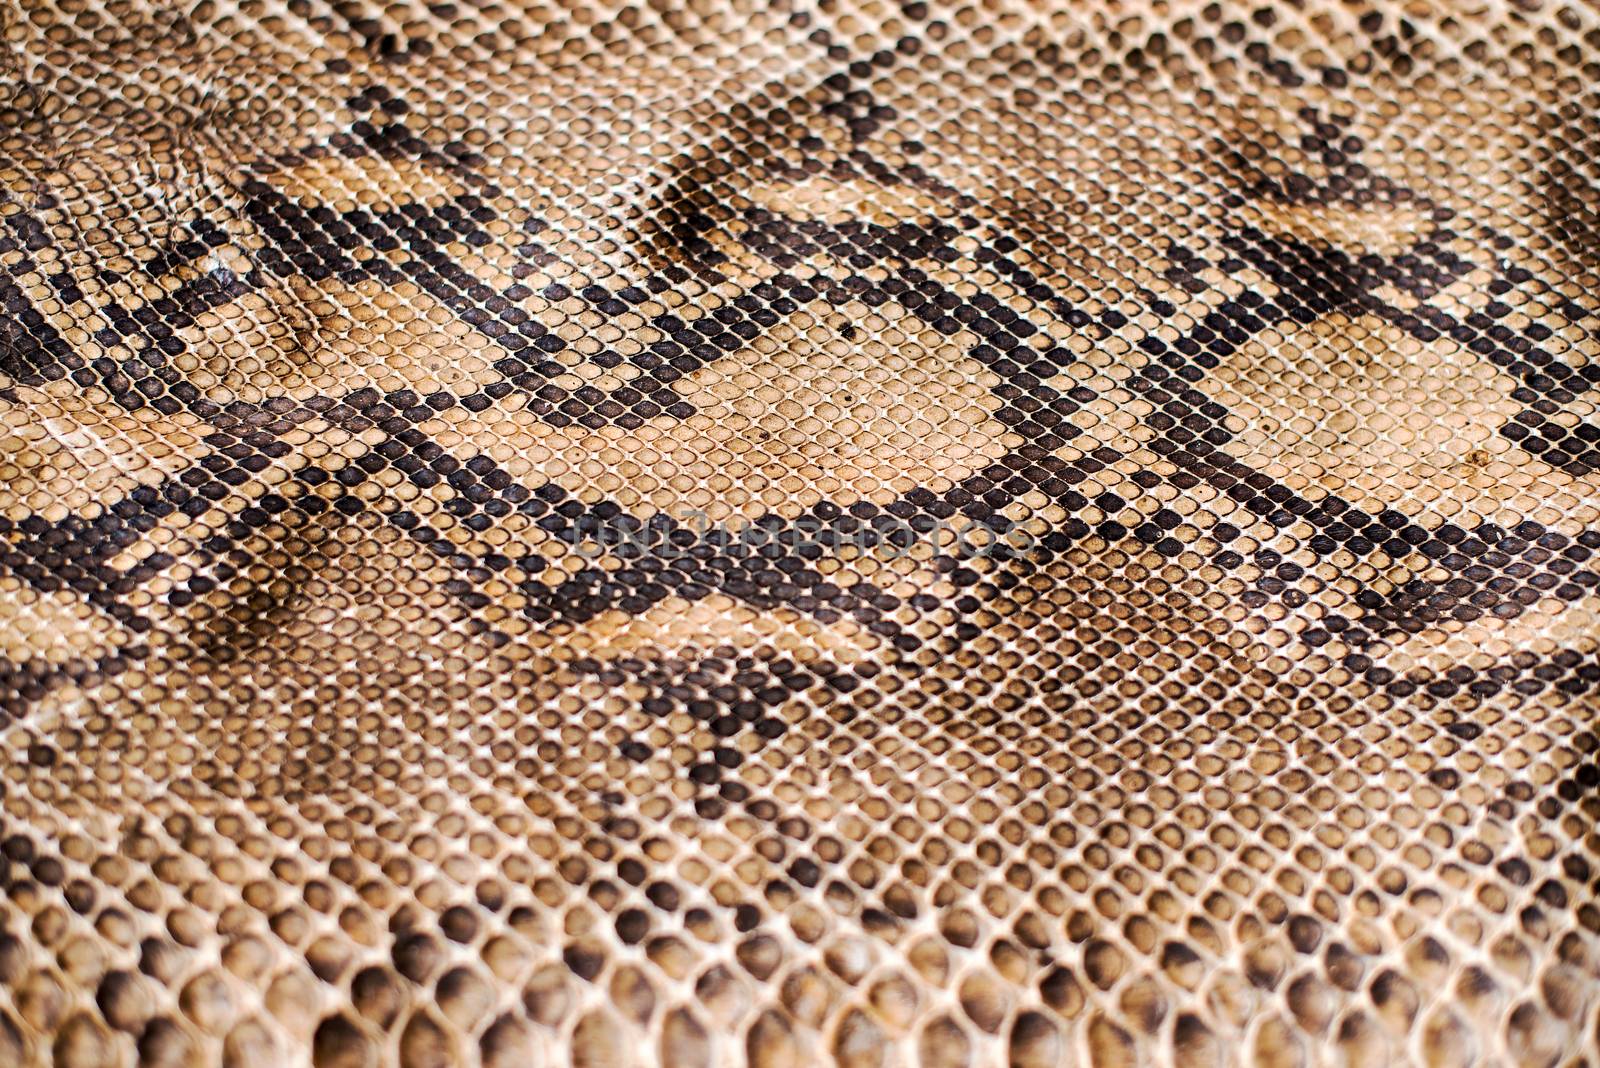 Python snake skin pattern by Yuri2012